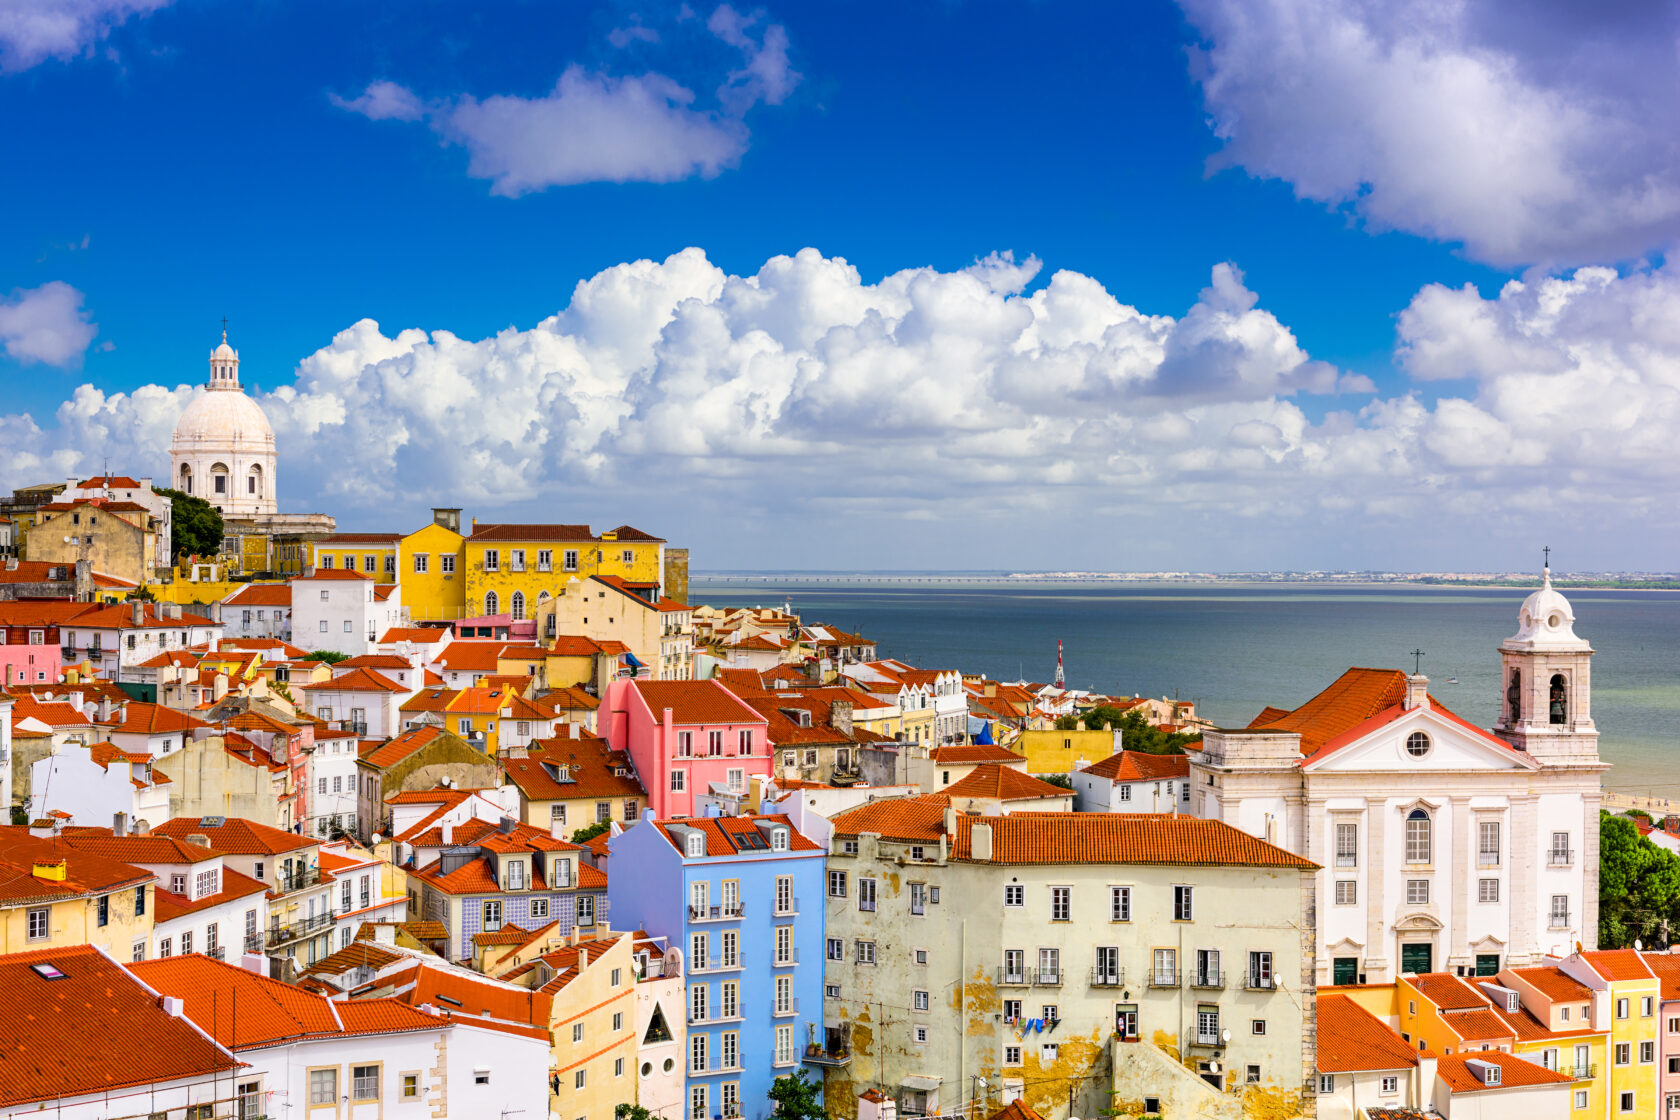 A view of Lisbon, Portugal (an Atlantis site).